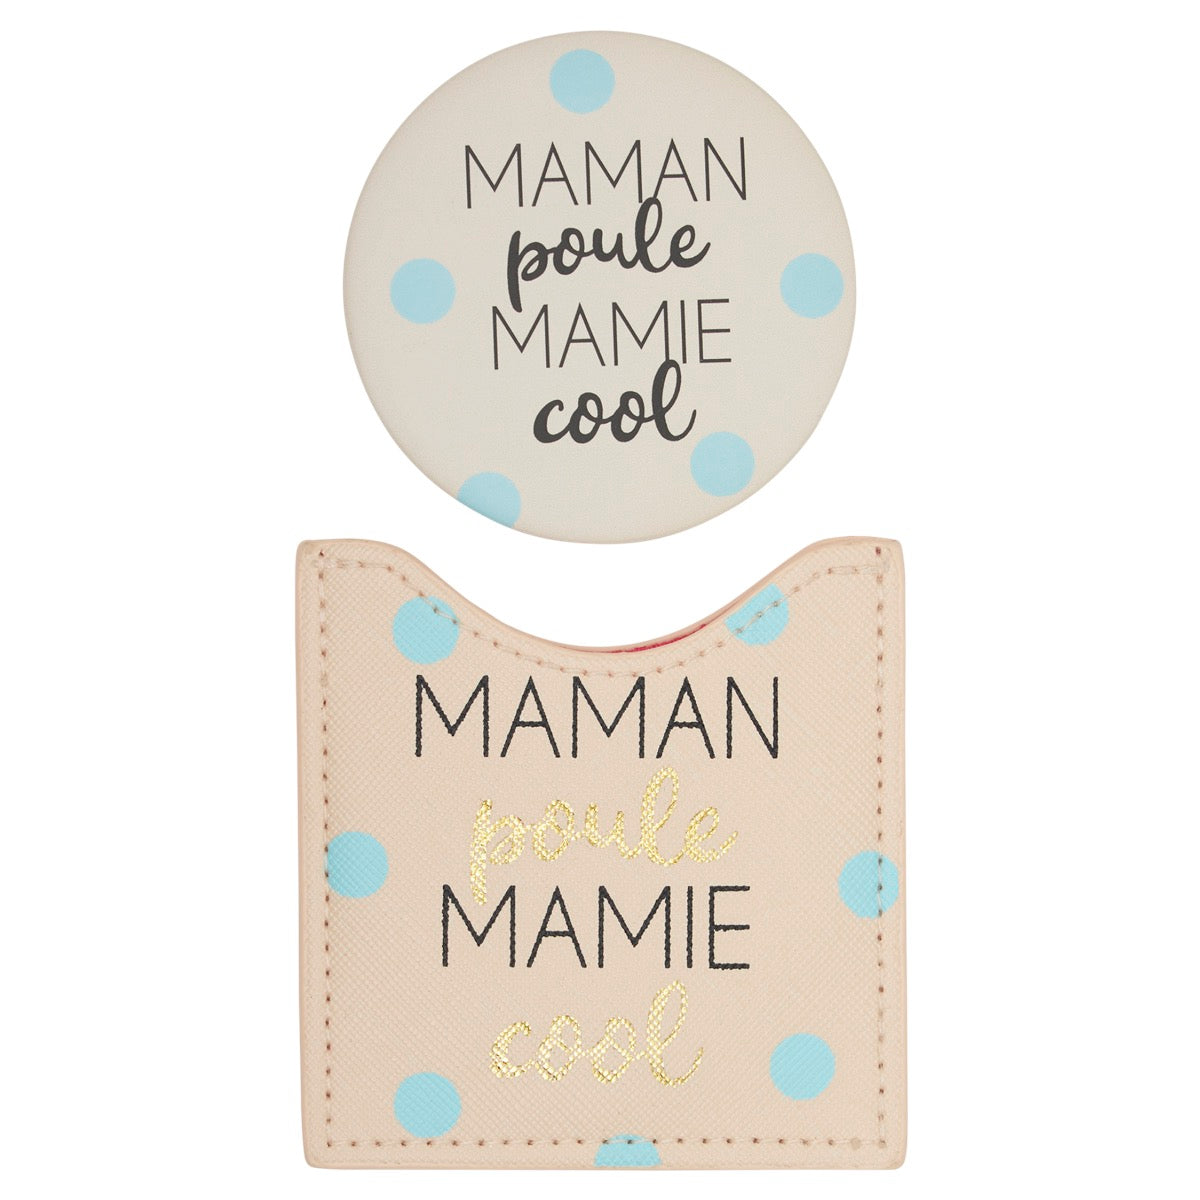 Miroir Maman poule Mamie cool